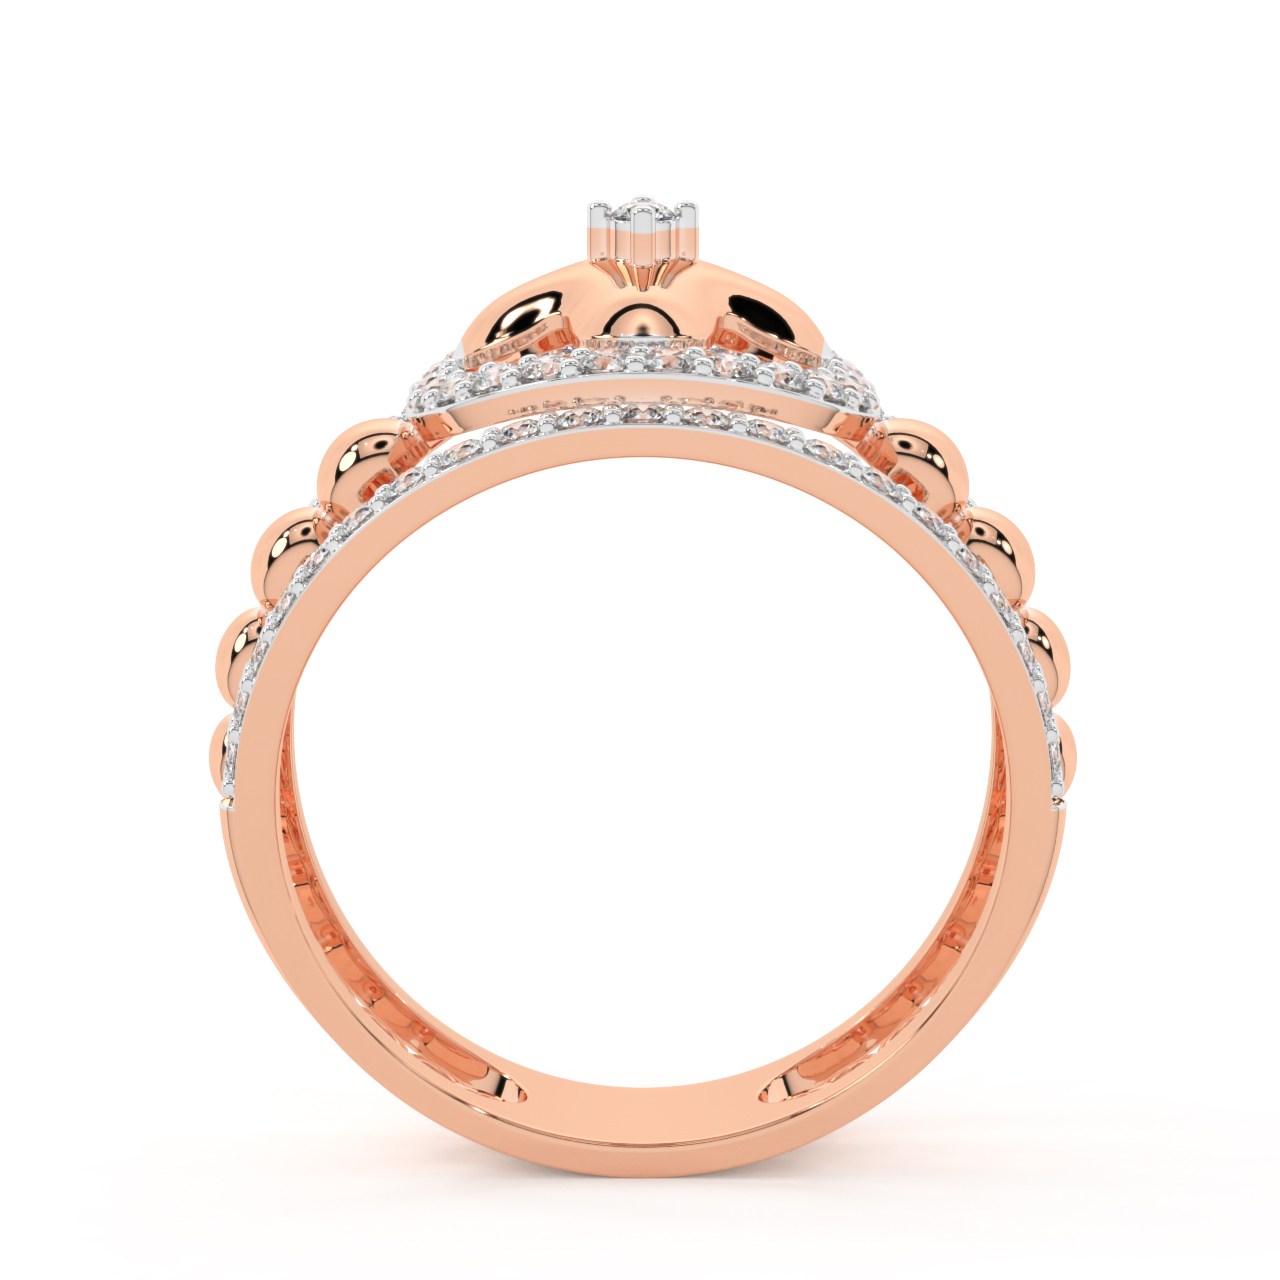 Star Fish Diamond Engagement Ring